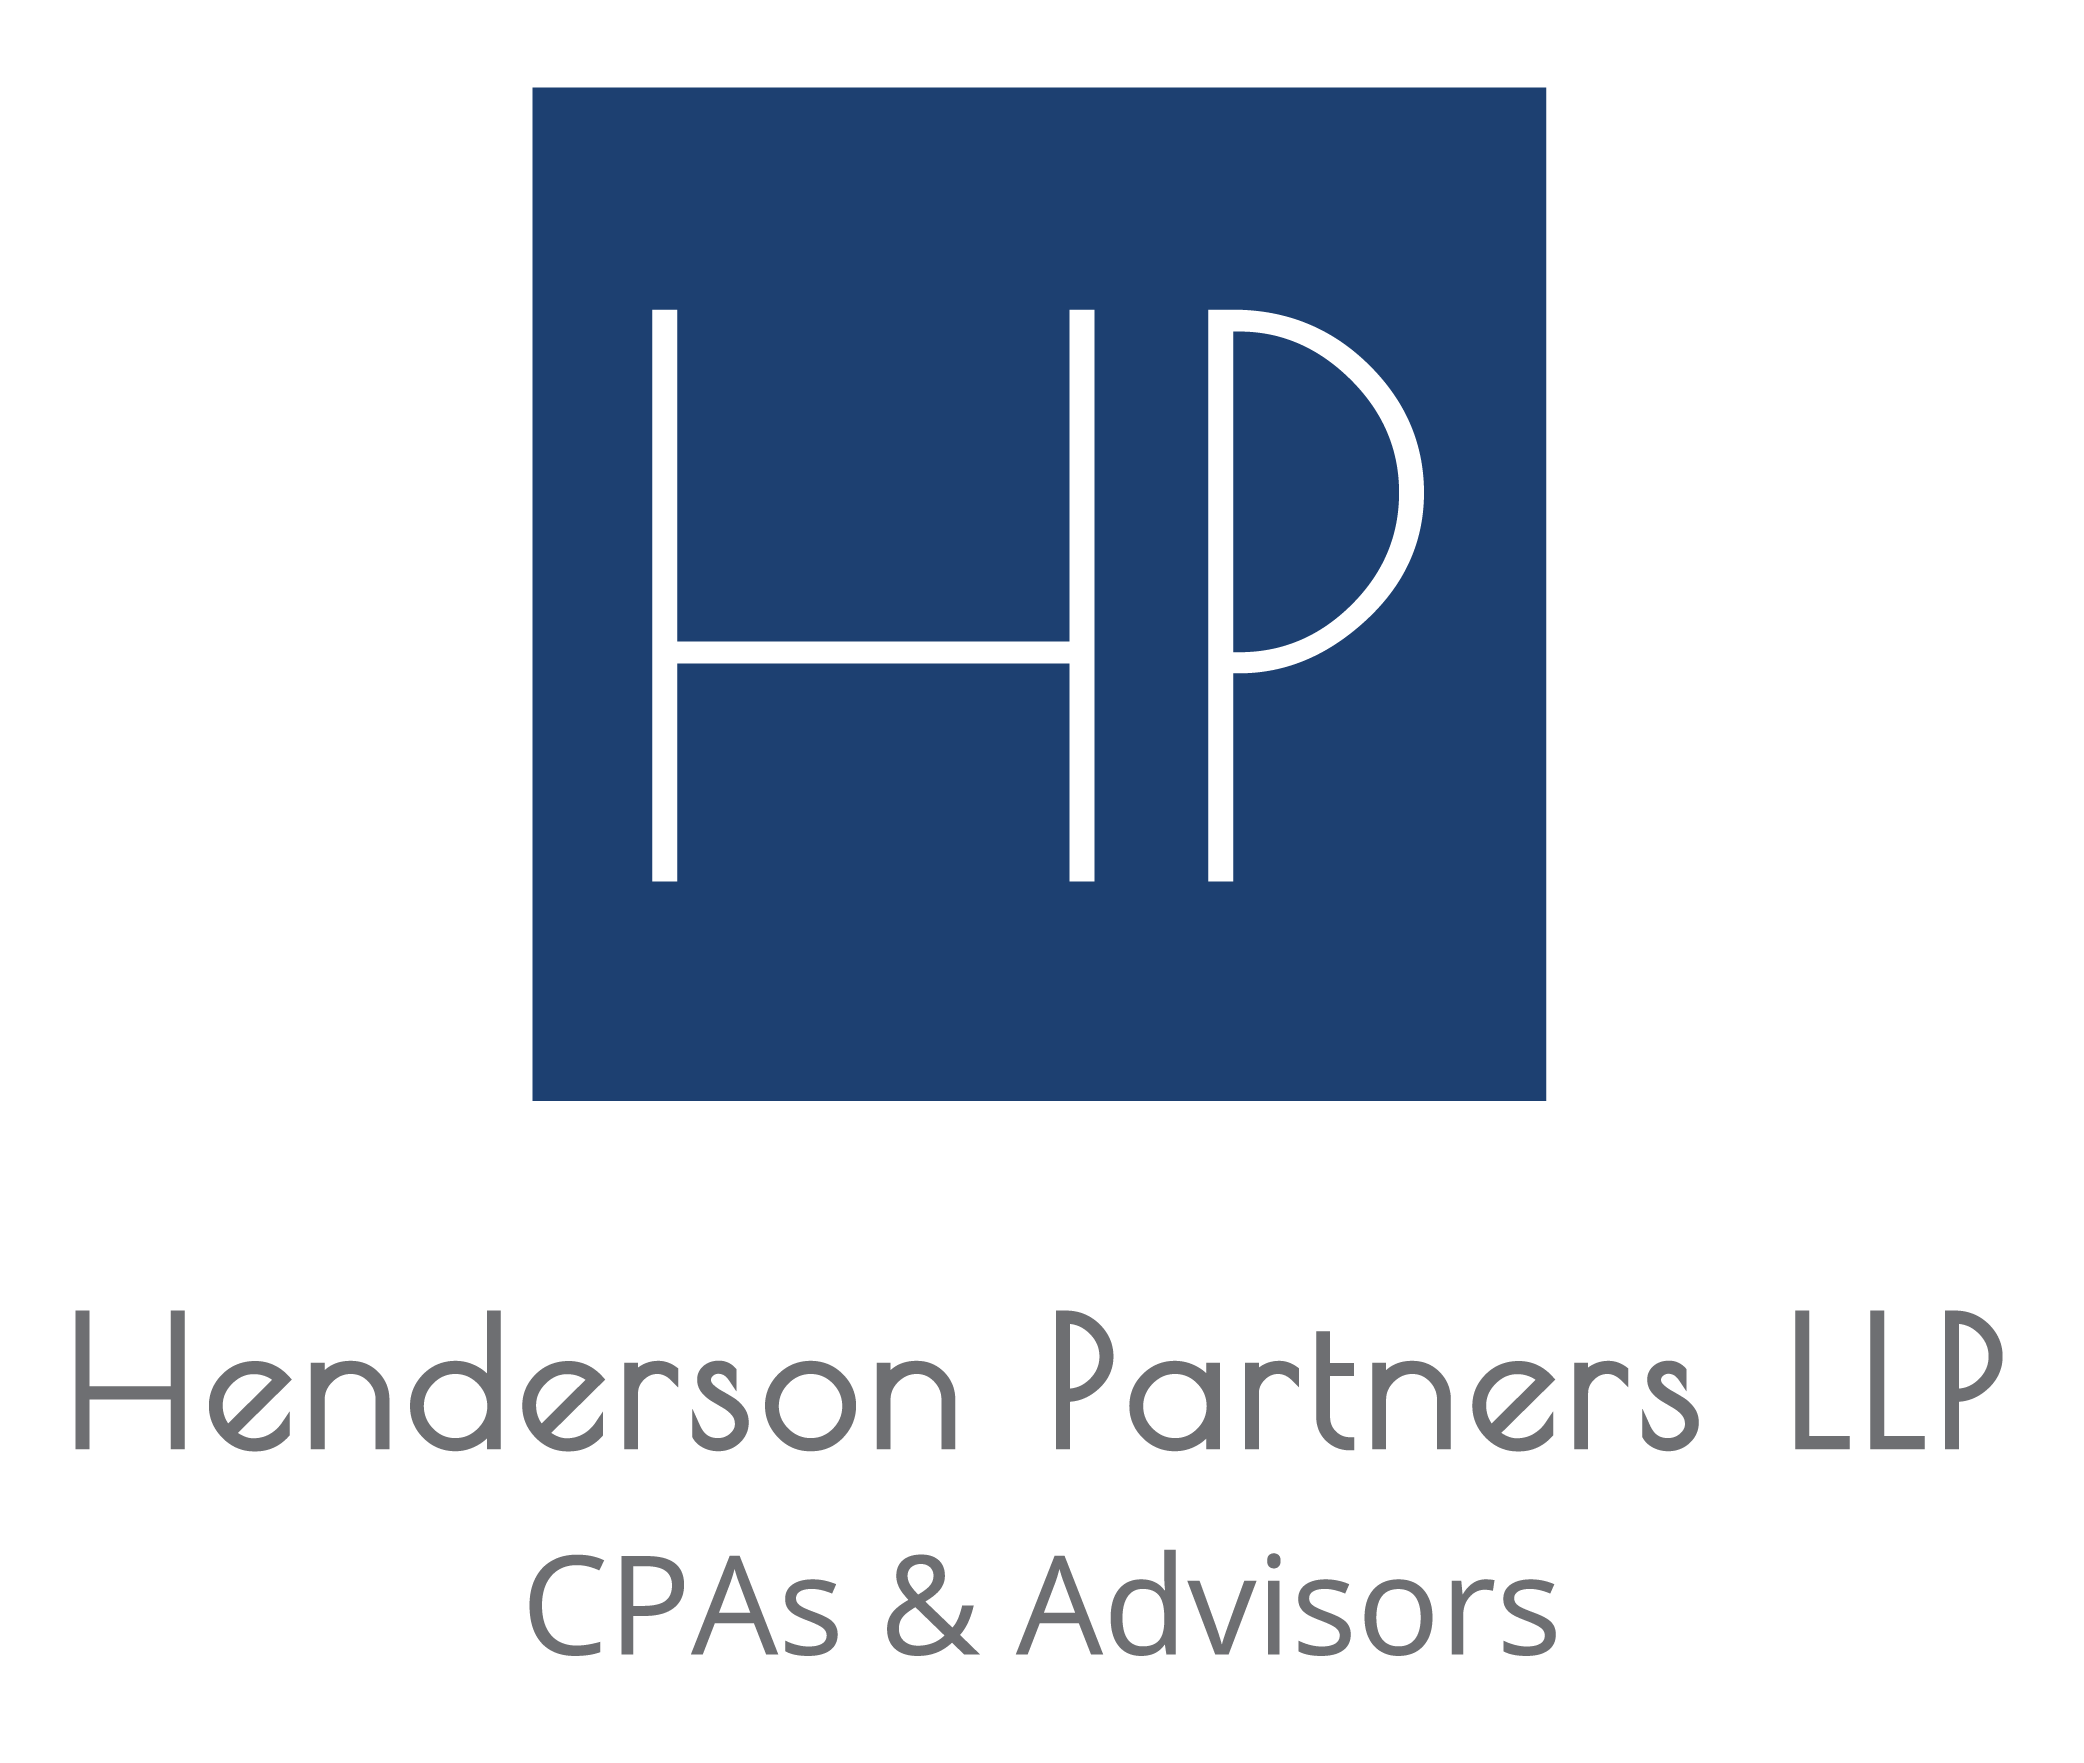 Henderson Partners LLP